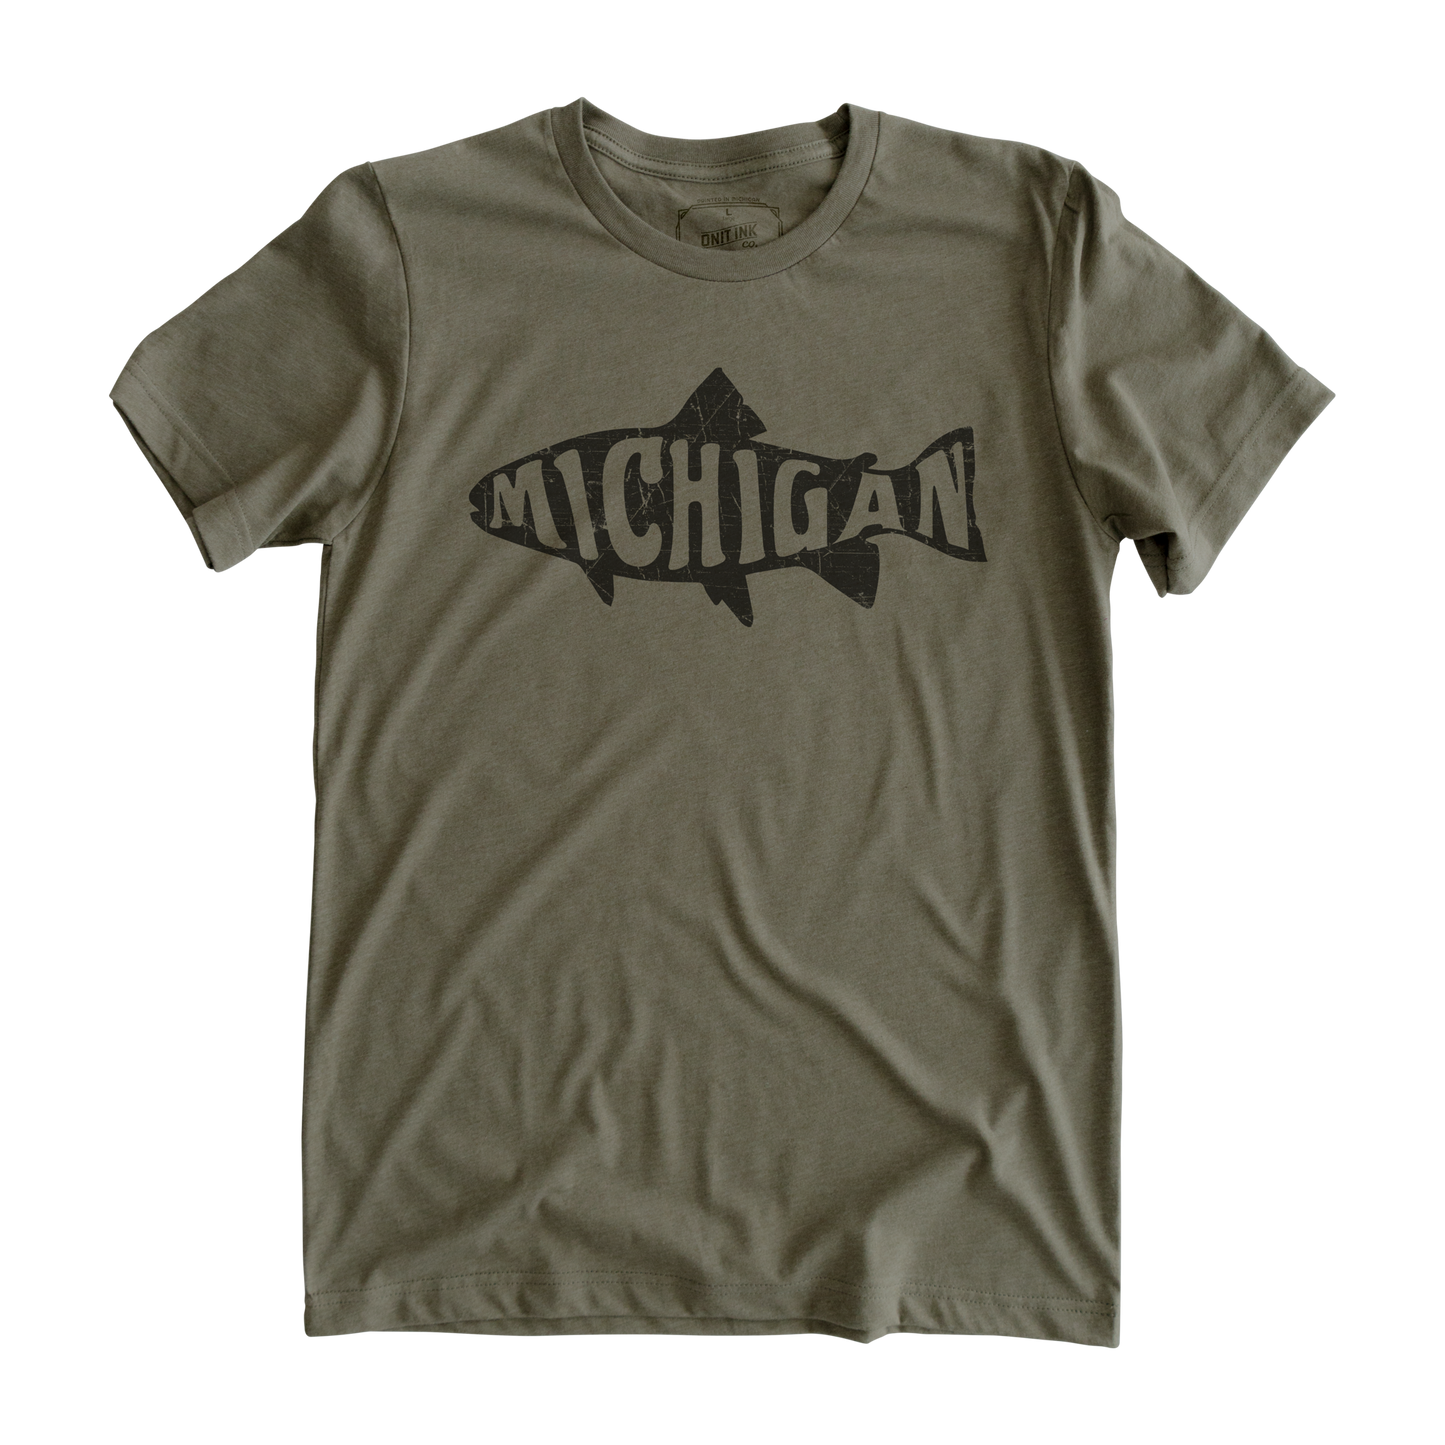 Michigan Fishing T-Shirt